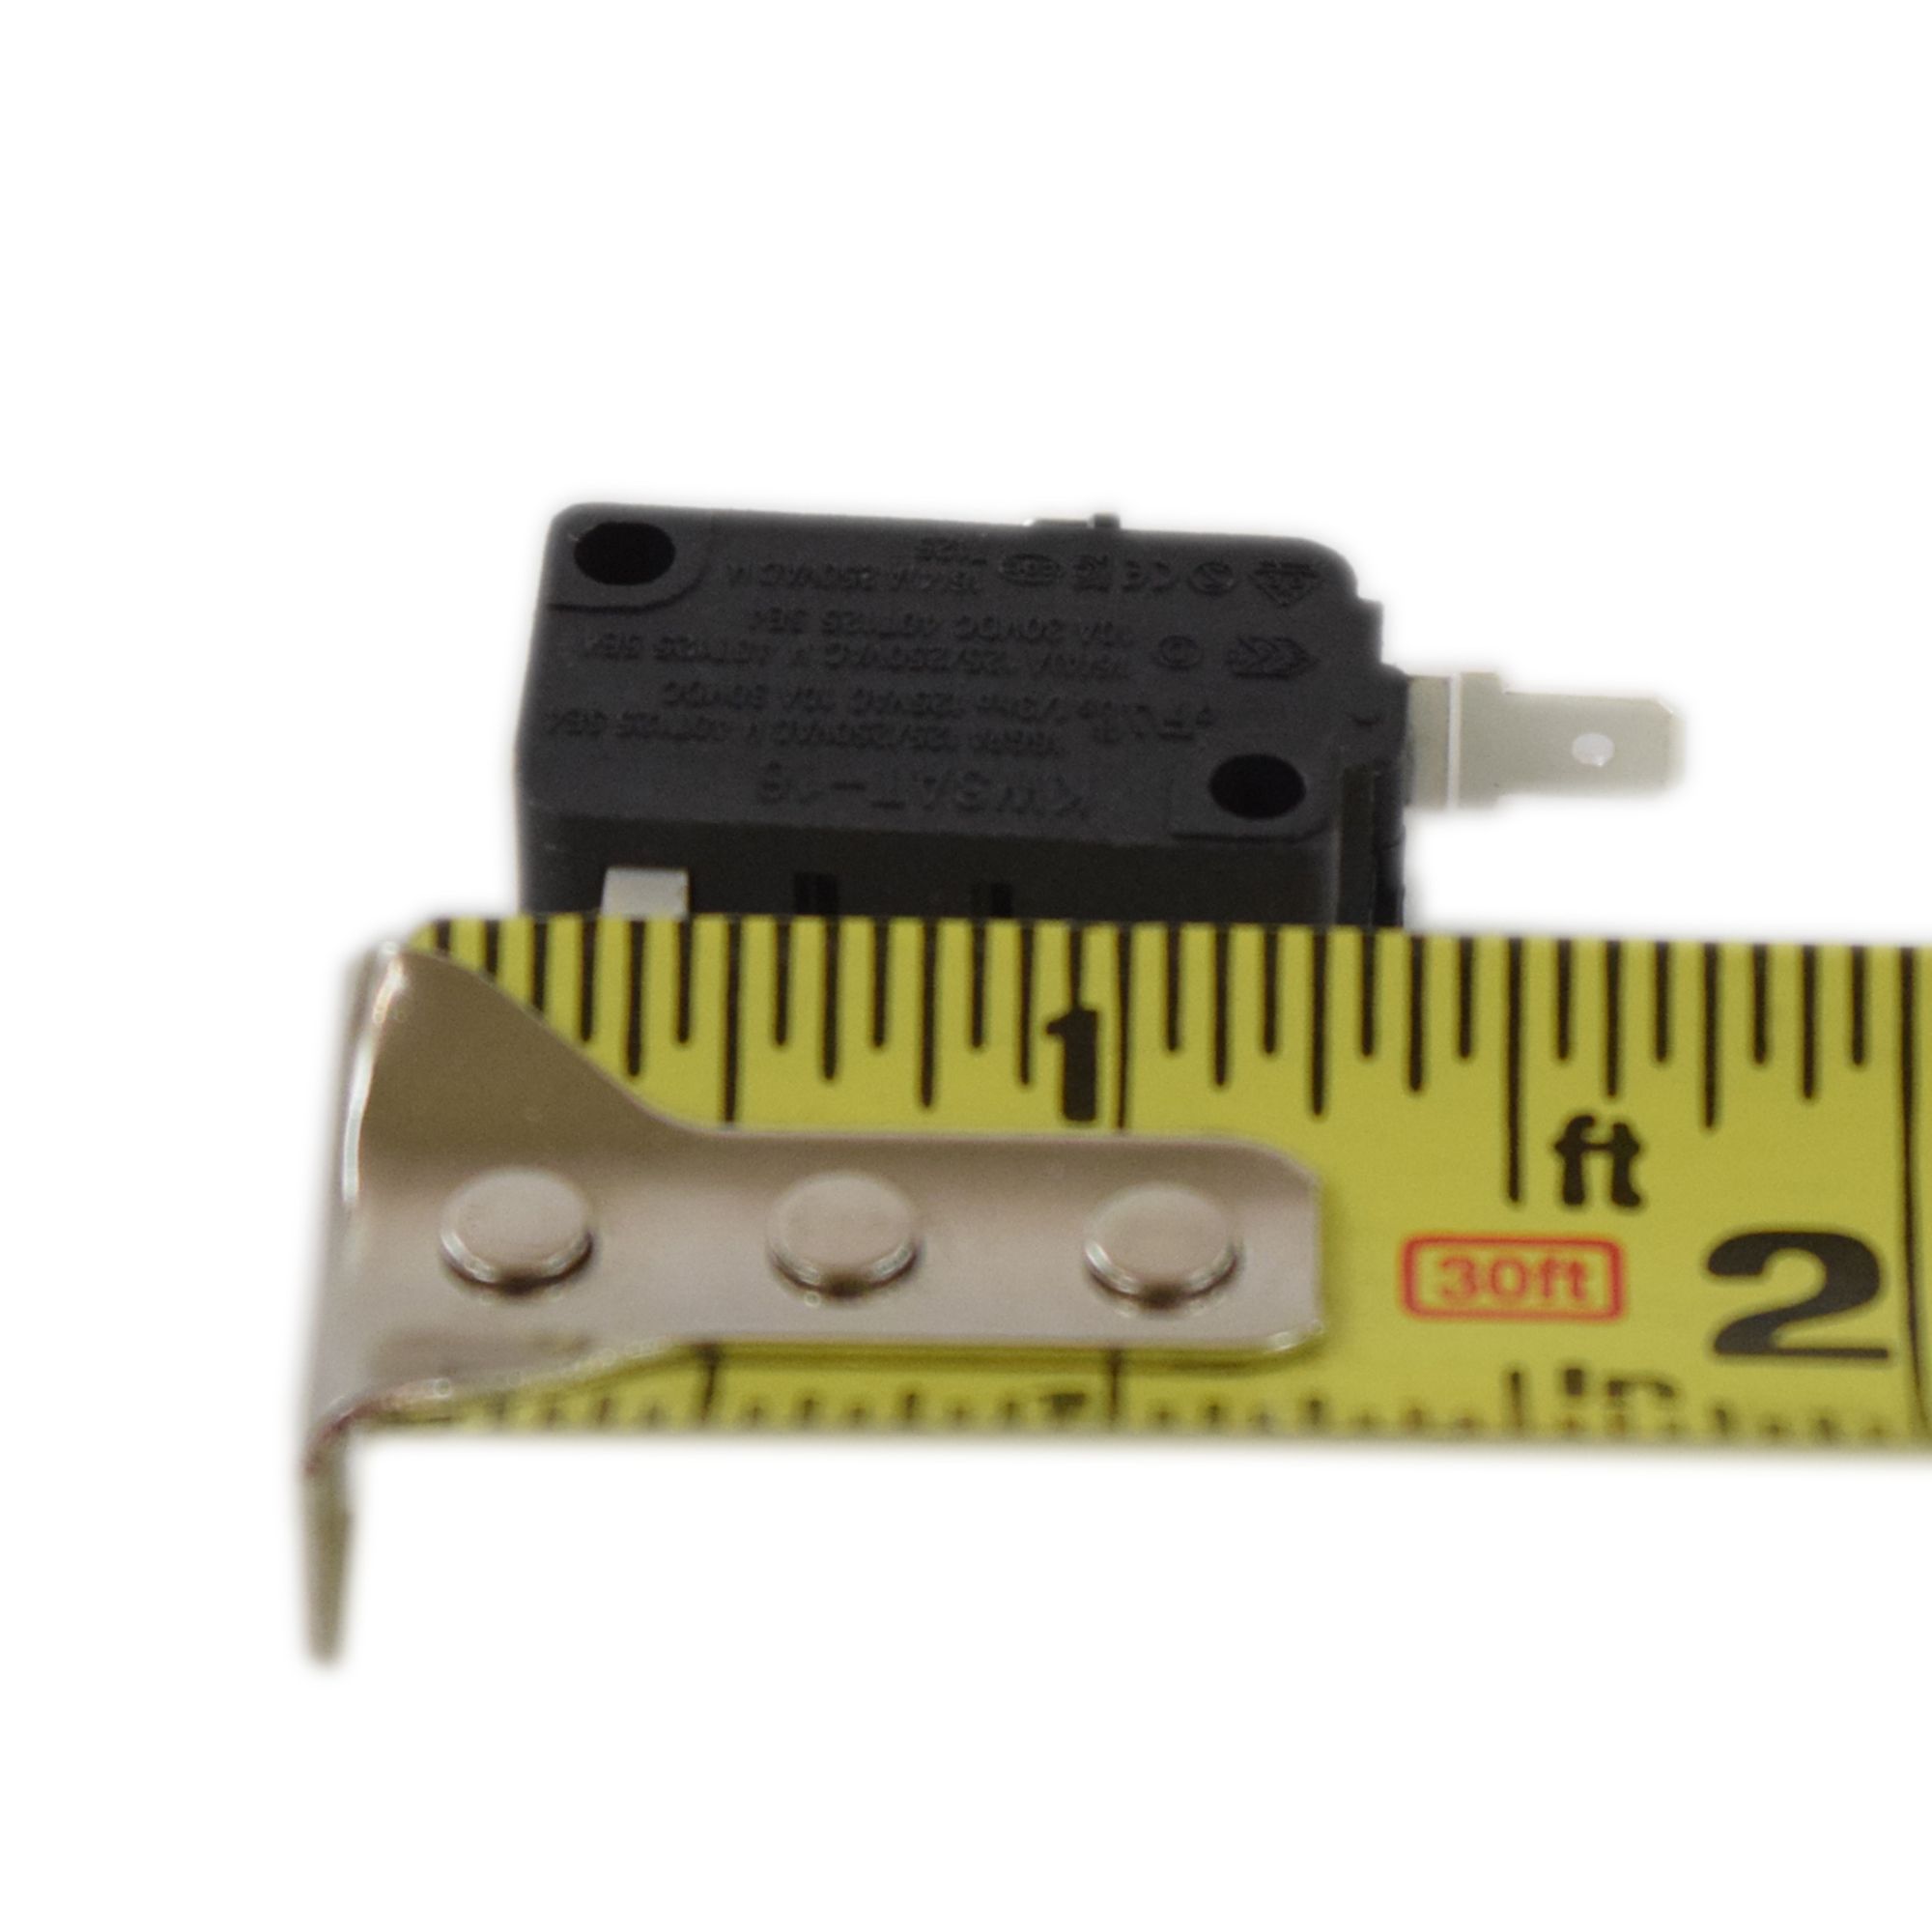 Frigidaire 5304509460 Microwave Door Interlock Switch (replaces 5304464099, 5304520020) Genuine Original Equipment Manufacturer